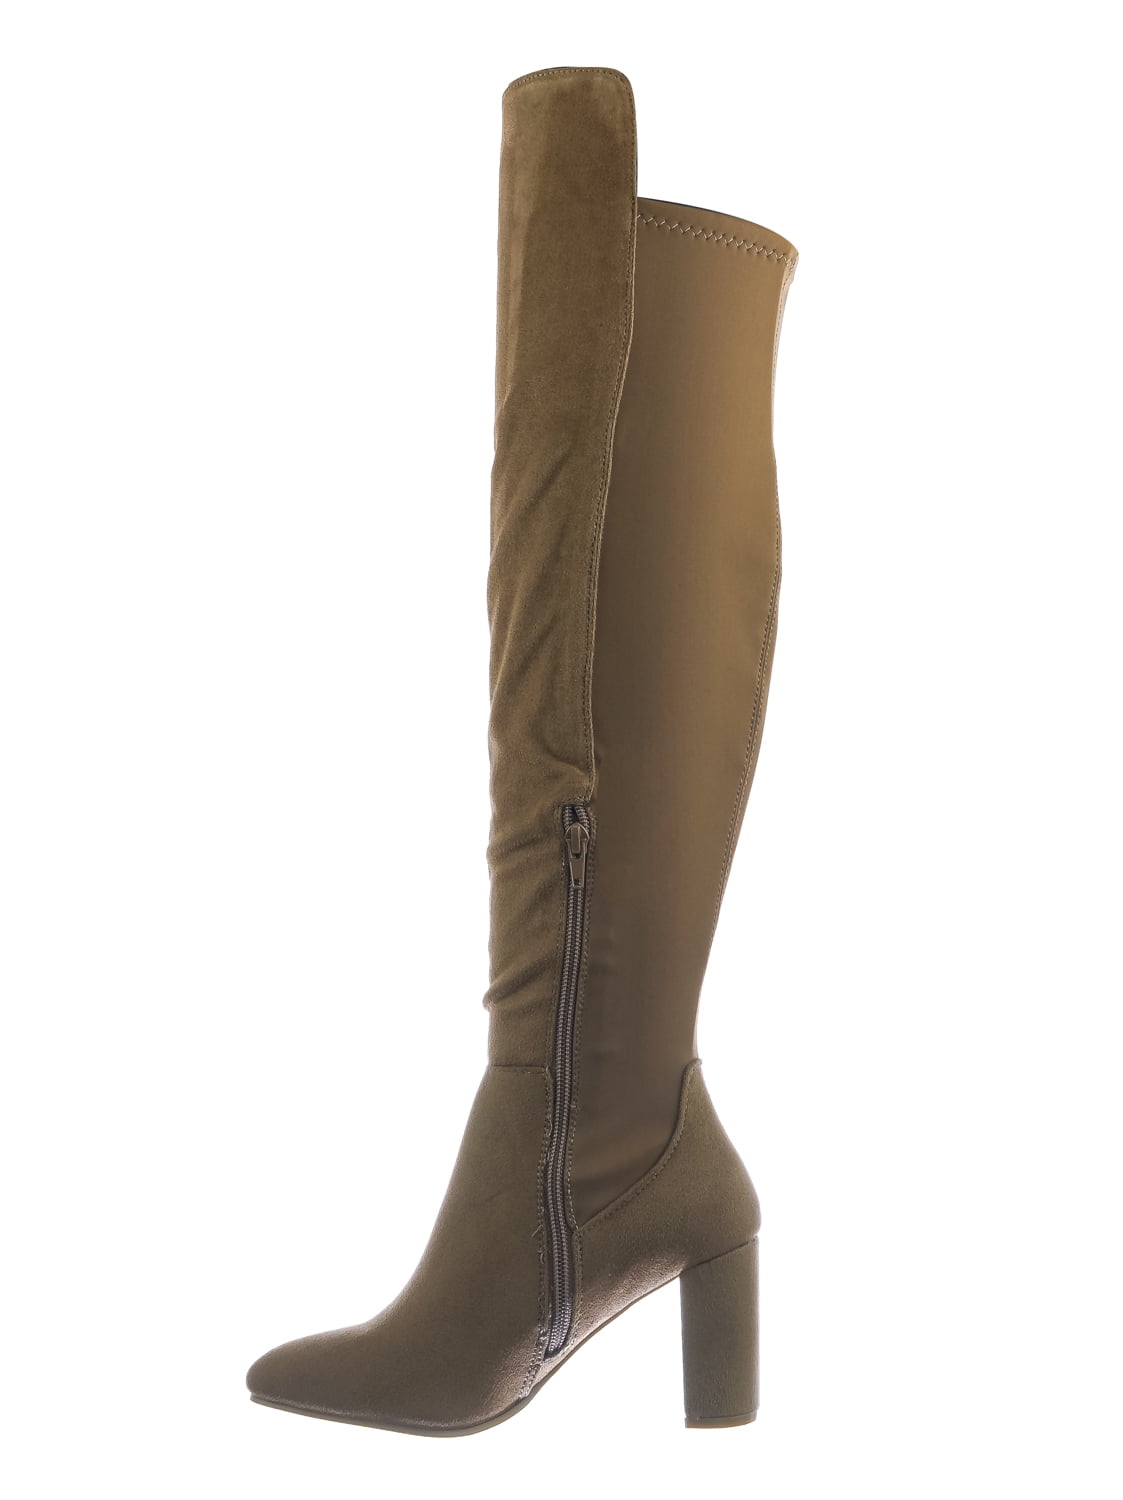 Blake05 Block Heel Knee High Boots Women Elastic Thigh High Foldable 